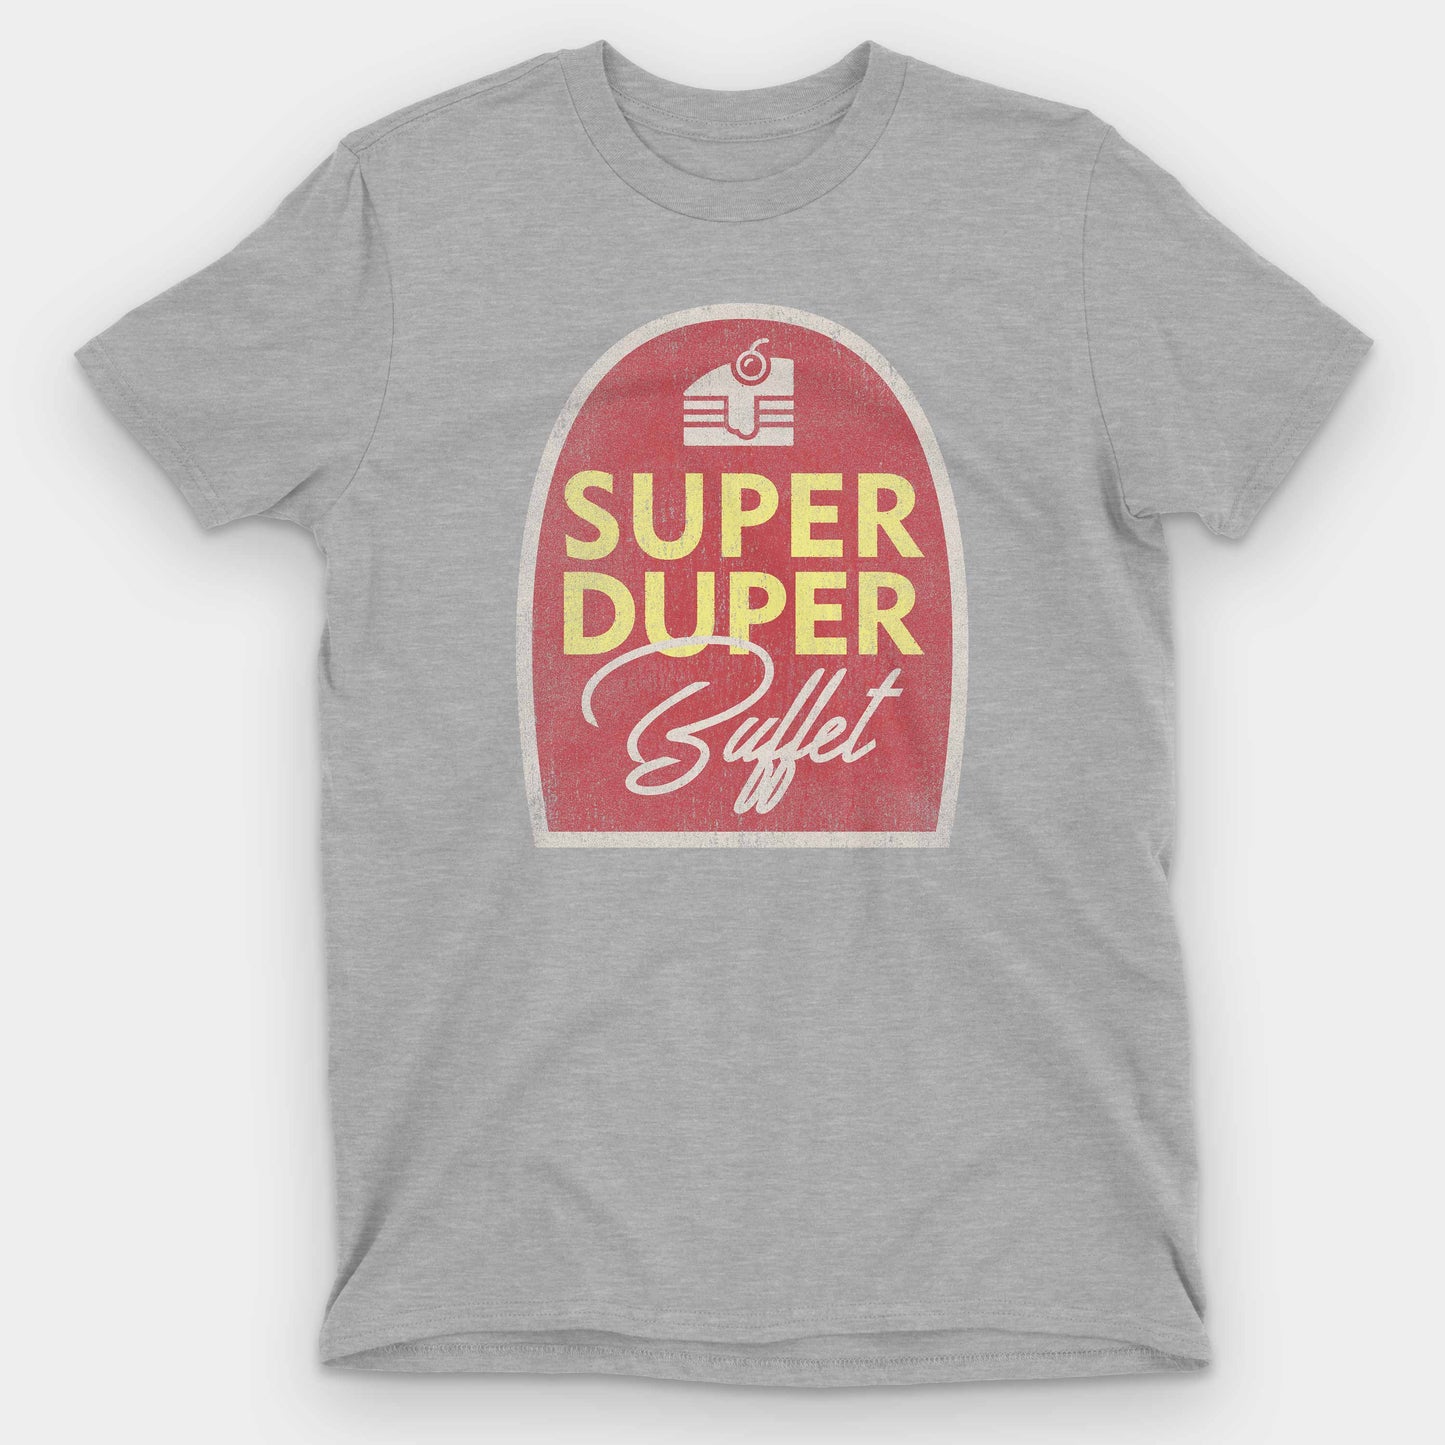 Heather Grey Super Duper Buffet Graphic T-Shirt by Snaxtime